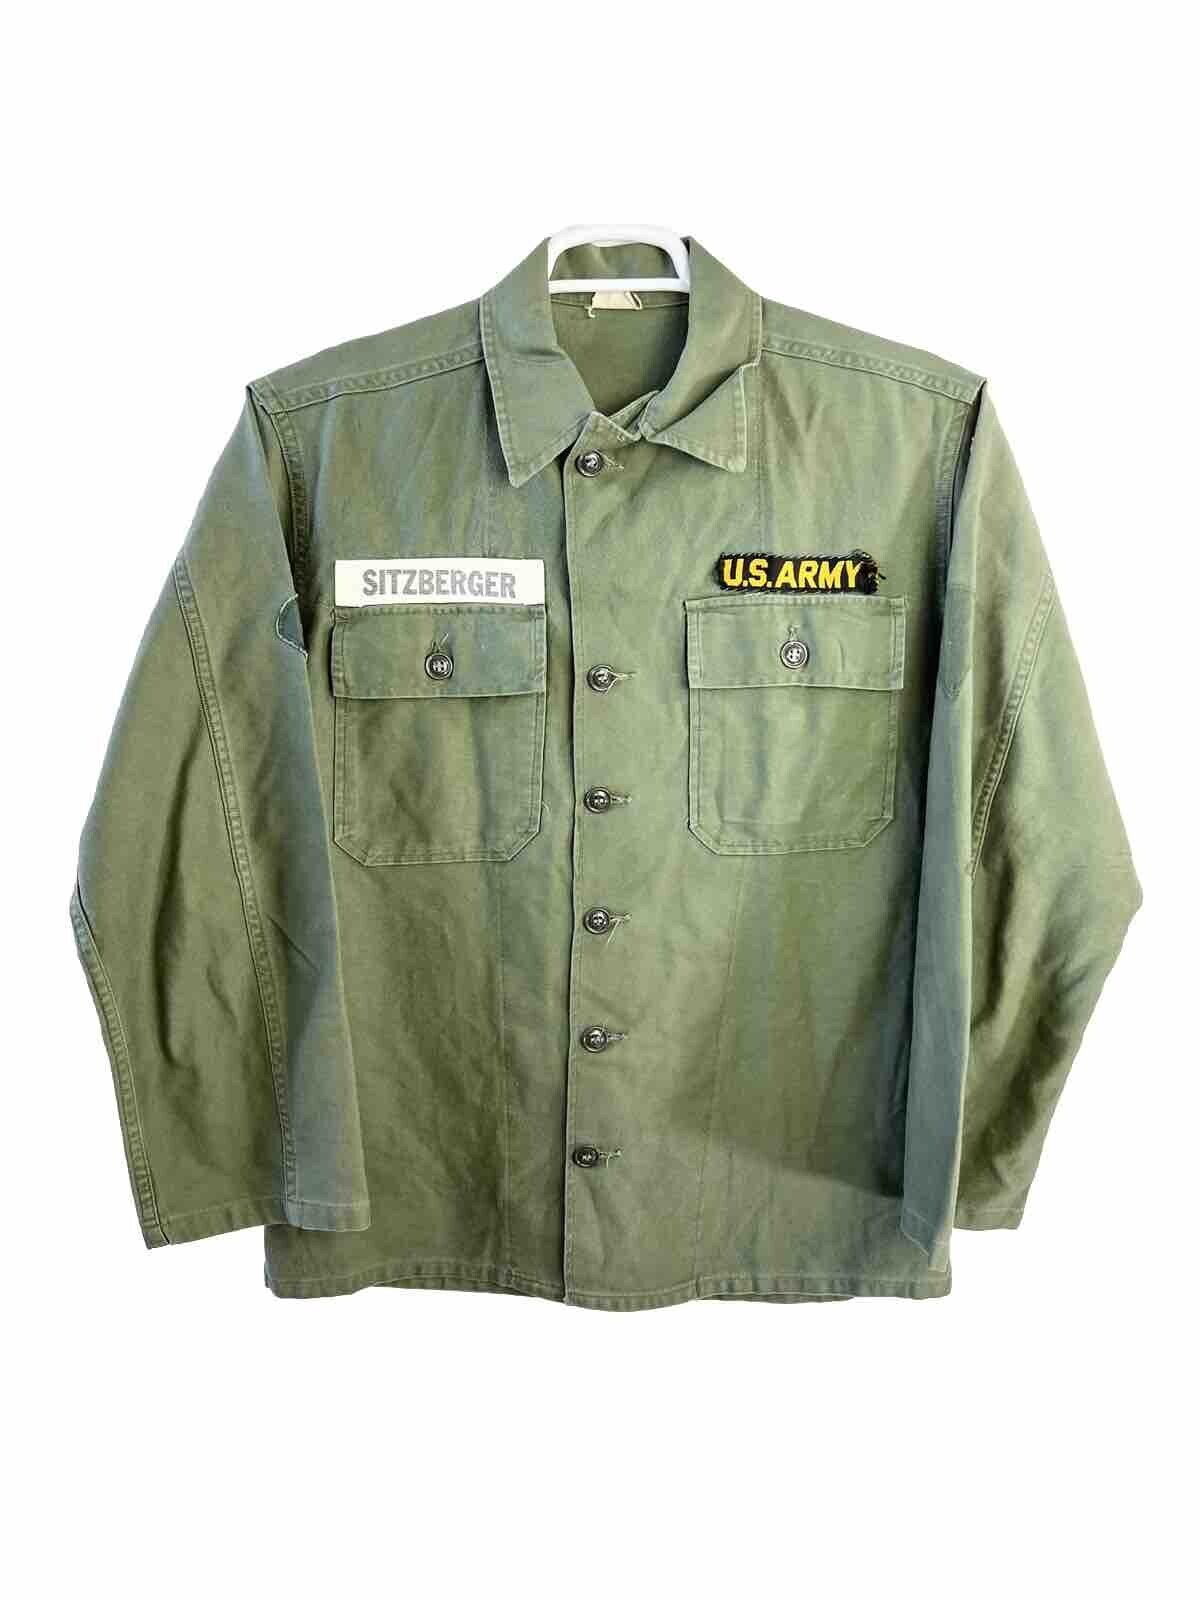 Vintage Vietnam Era United States Army Uniform Shirt Mens Large Sateen OG-107